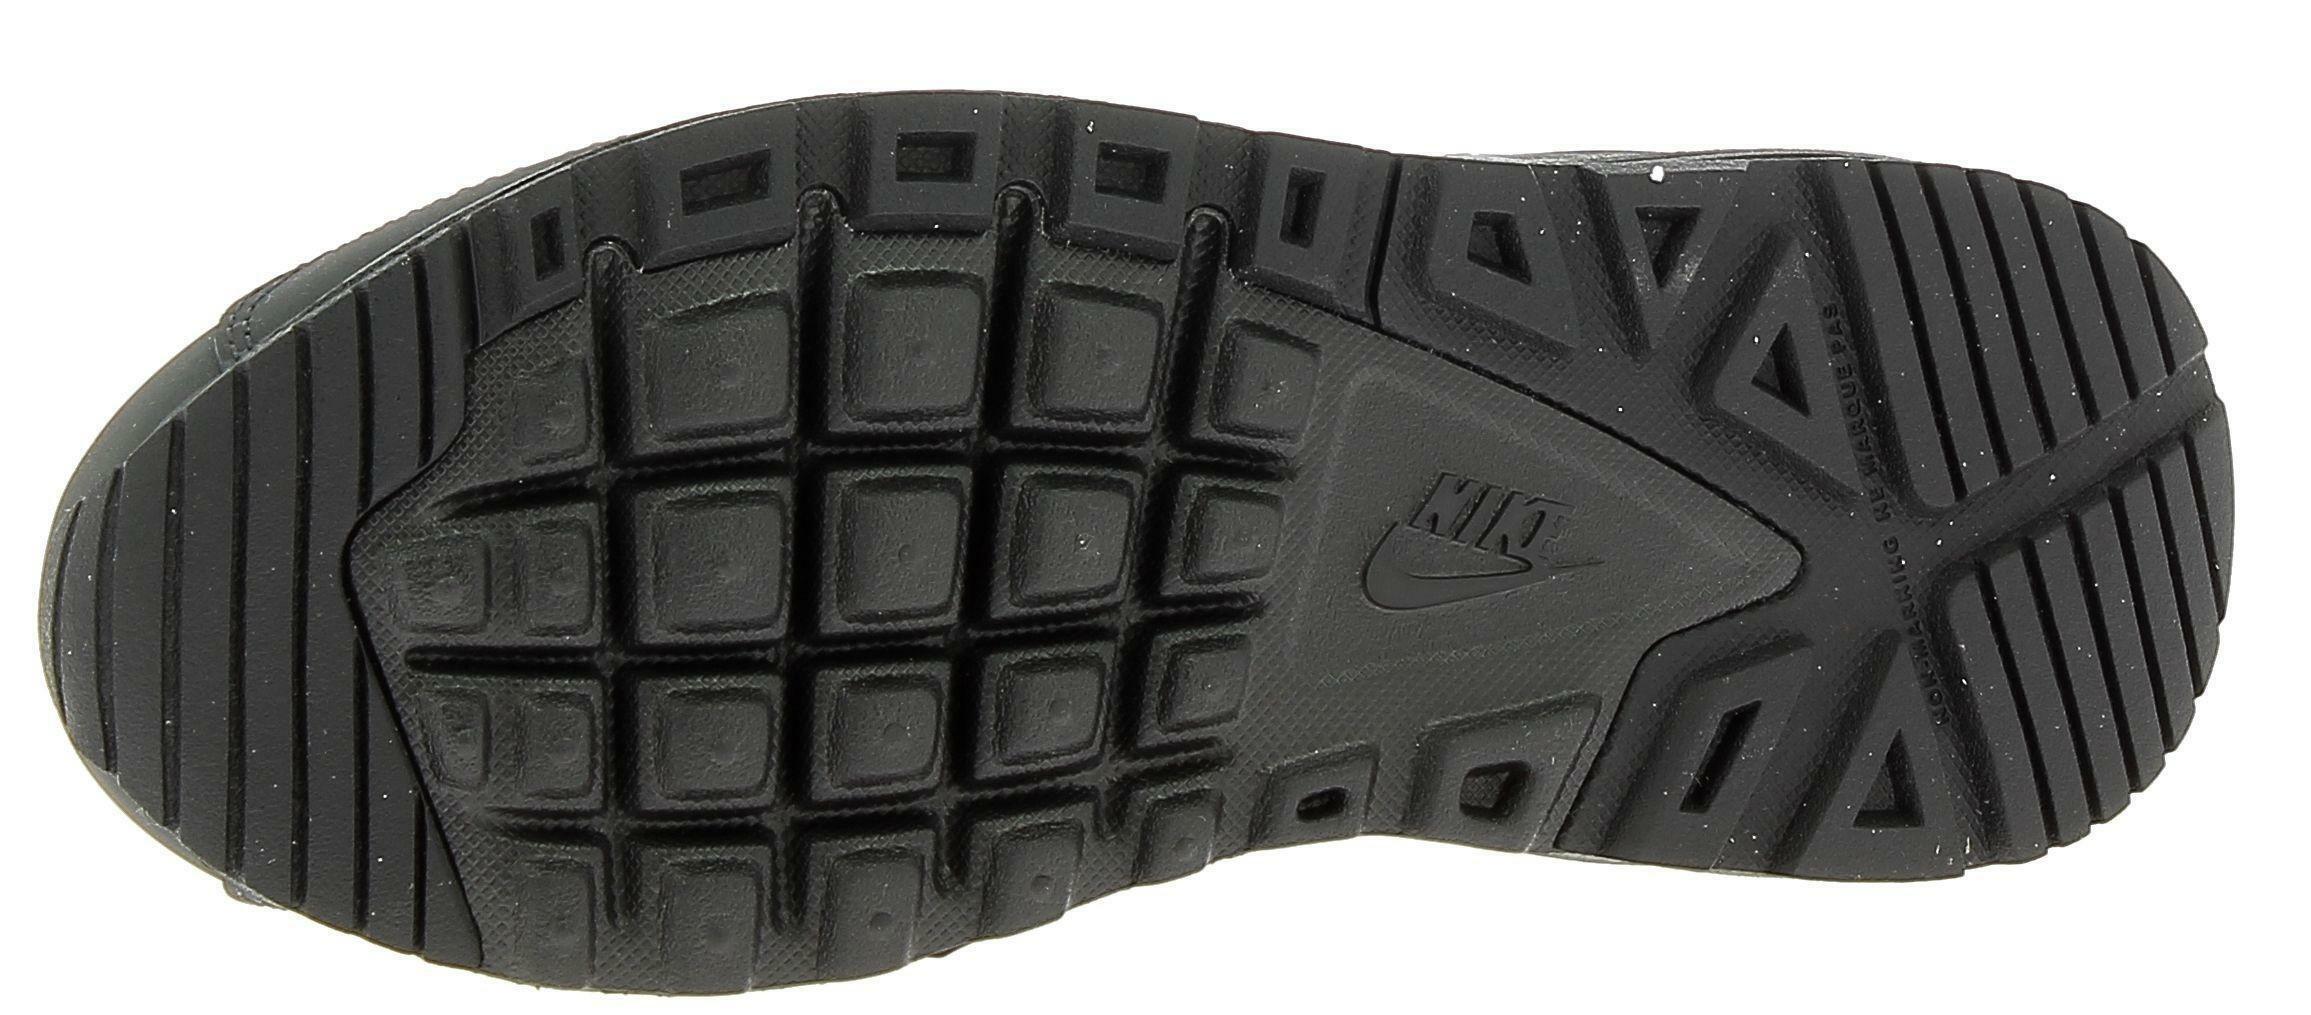 nike nike air max command flex (ps) scarpe sportive bamino nere